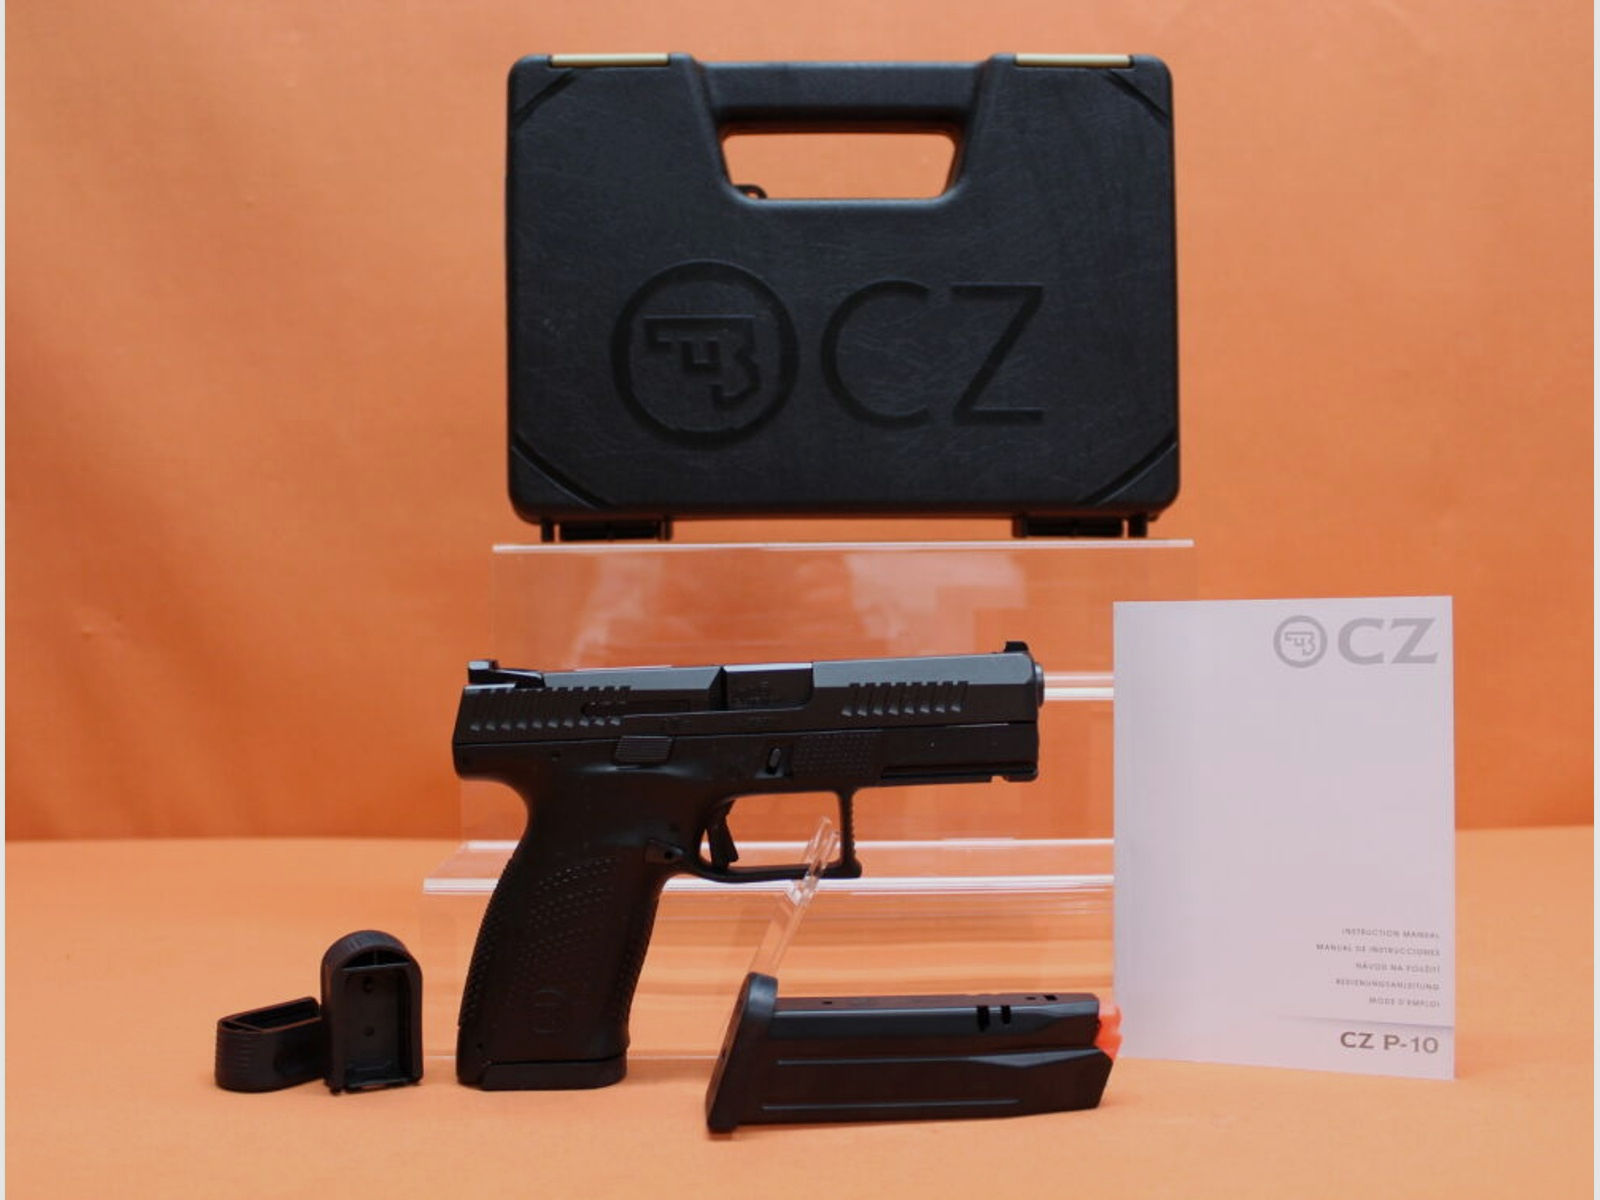 CZUB	 Ha.Pistole 9mmLuger CZUB CZ P-10 C 102mm Lauf/ Polymer-Griffstück/ Reservemagazin (9mmPara/9x19)